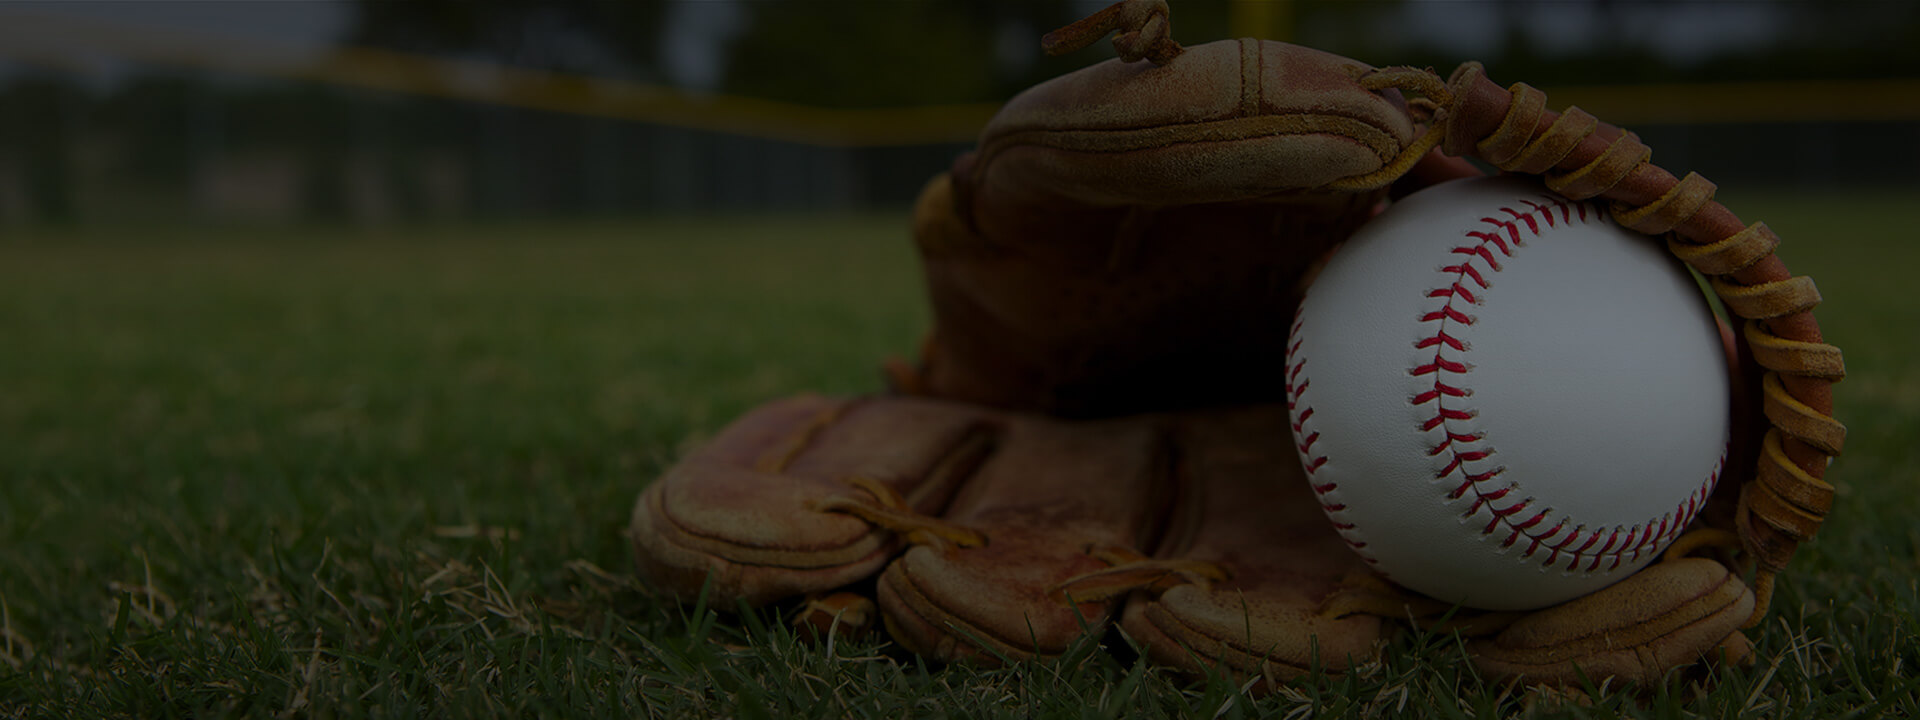 Wilson Baseball & Softball on X: Jose Altuve & Robinson Cano